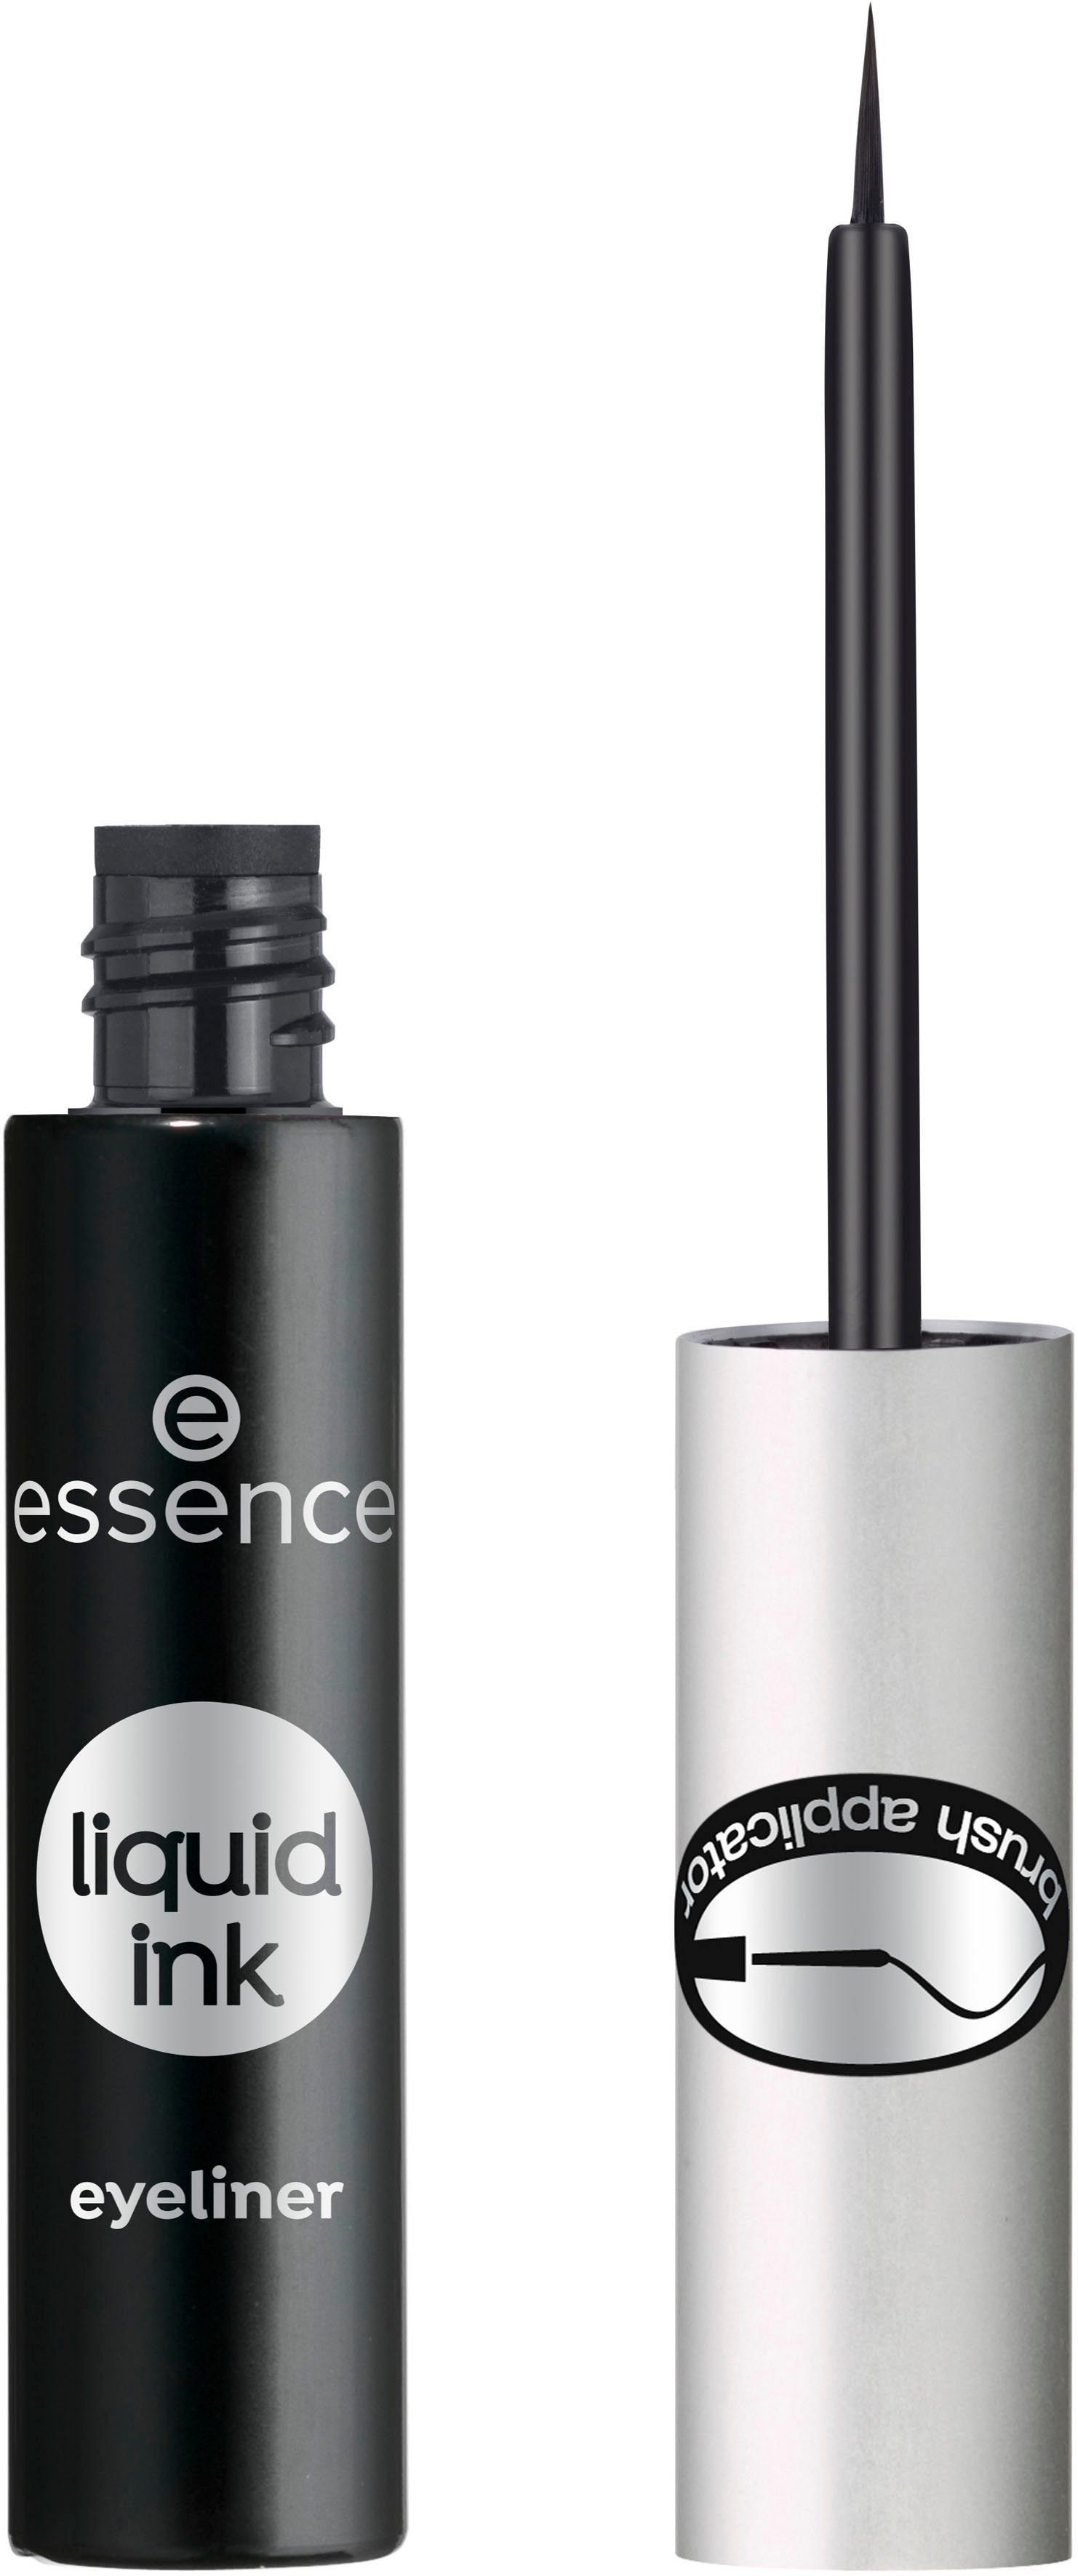 Essence Eyeliner eyeliner, 3-tlg. liquid ink